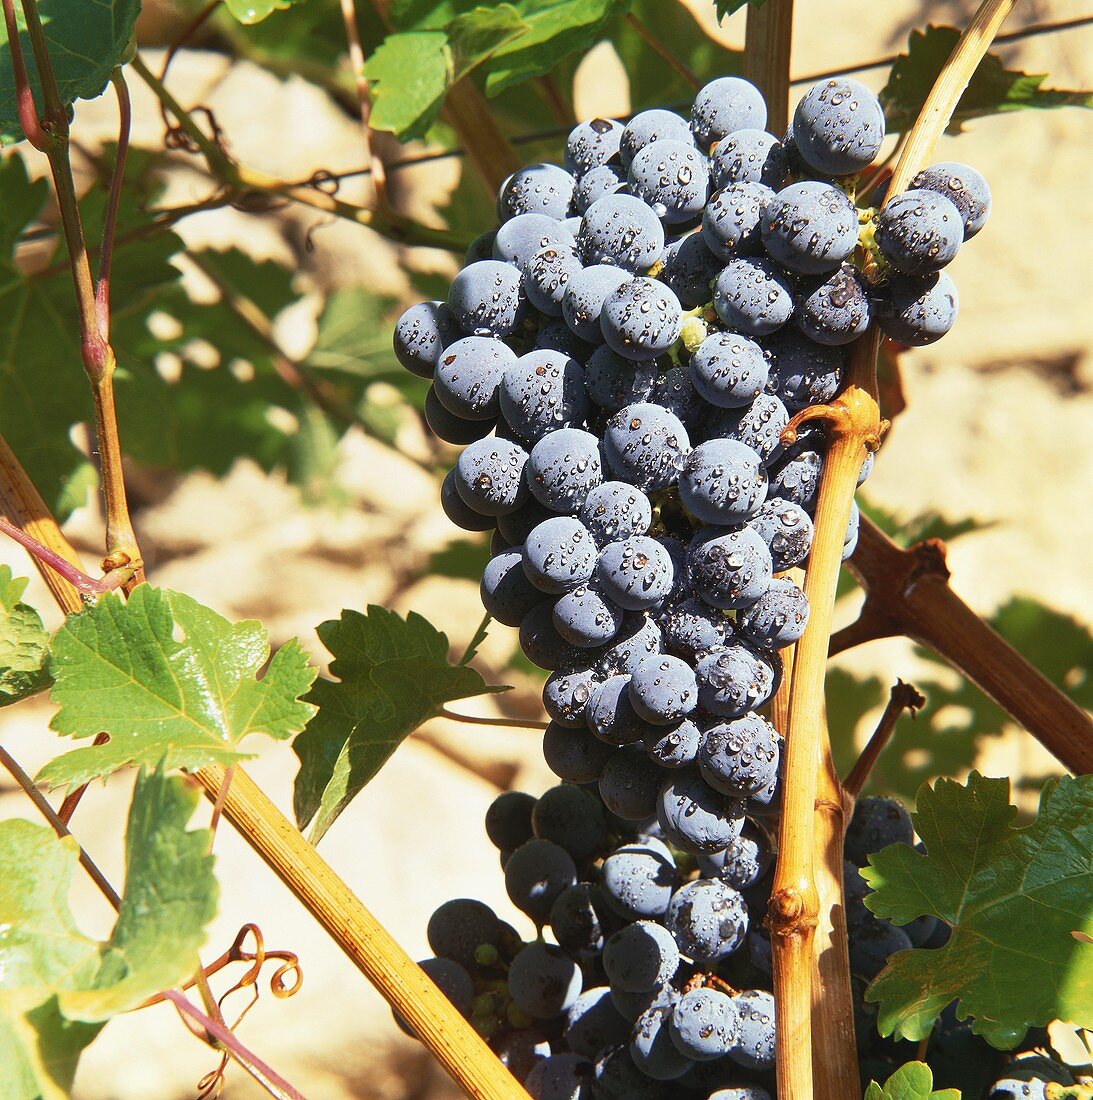 Cabernet grapes in vineyard, Meran, S. Tyrol